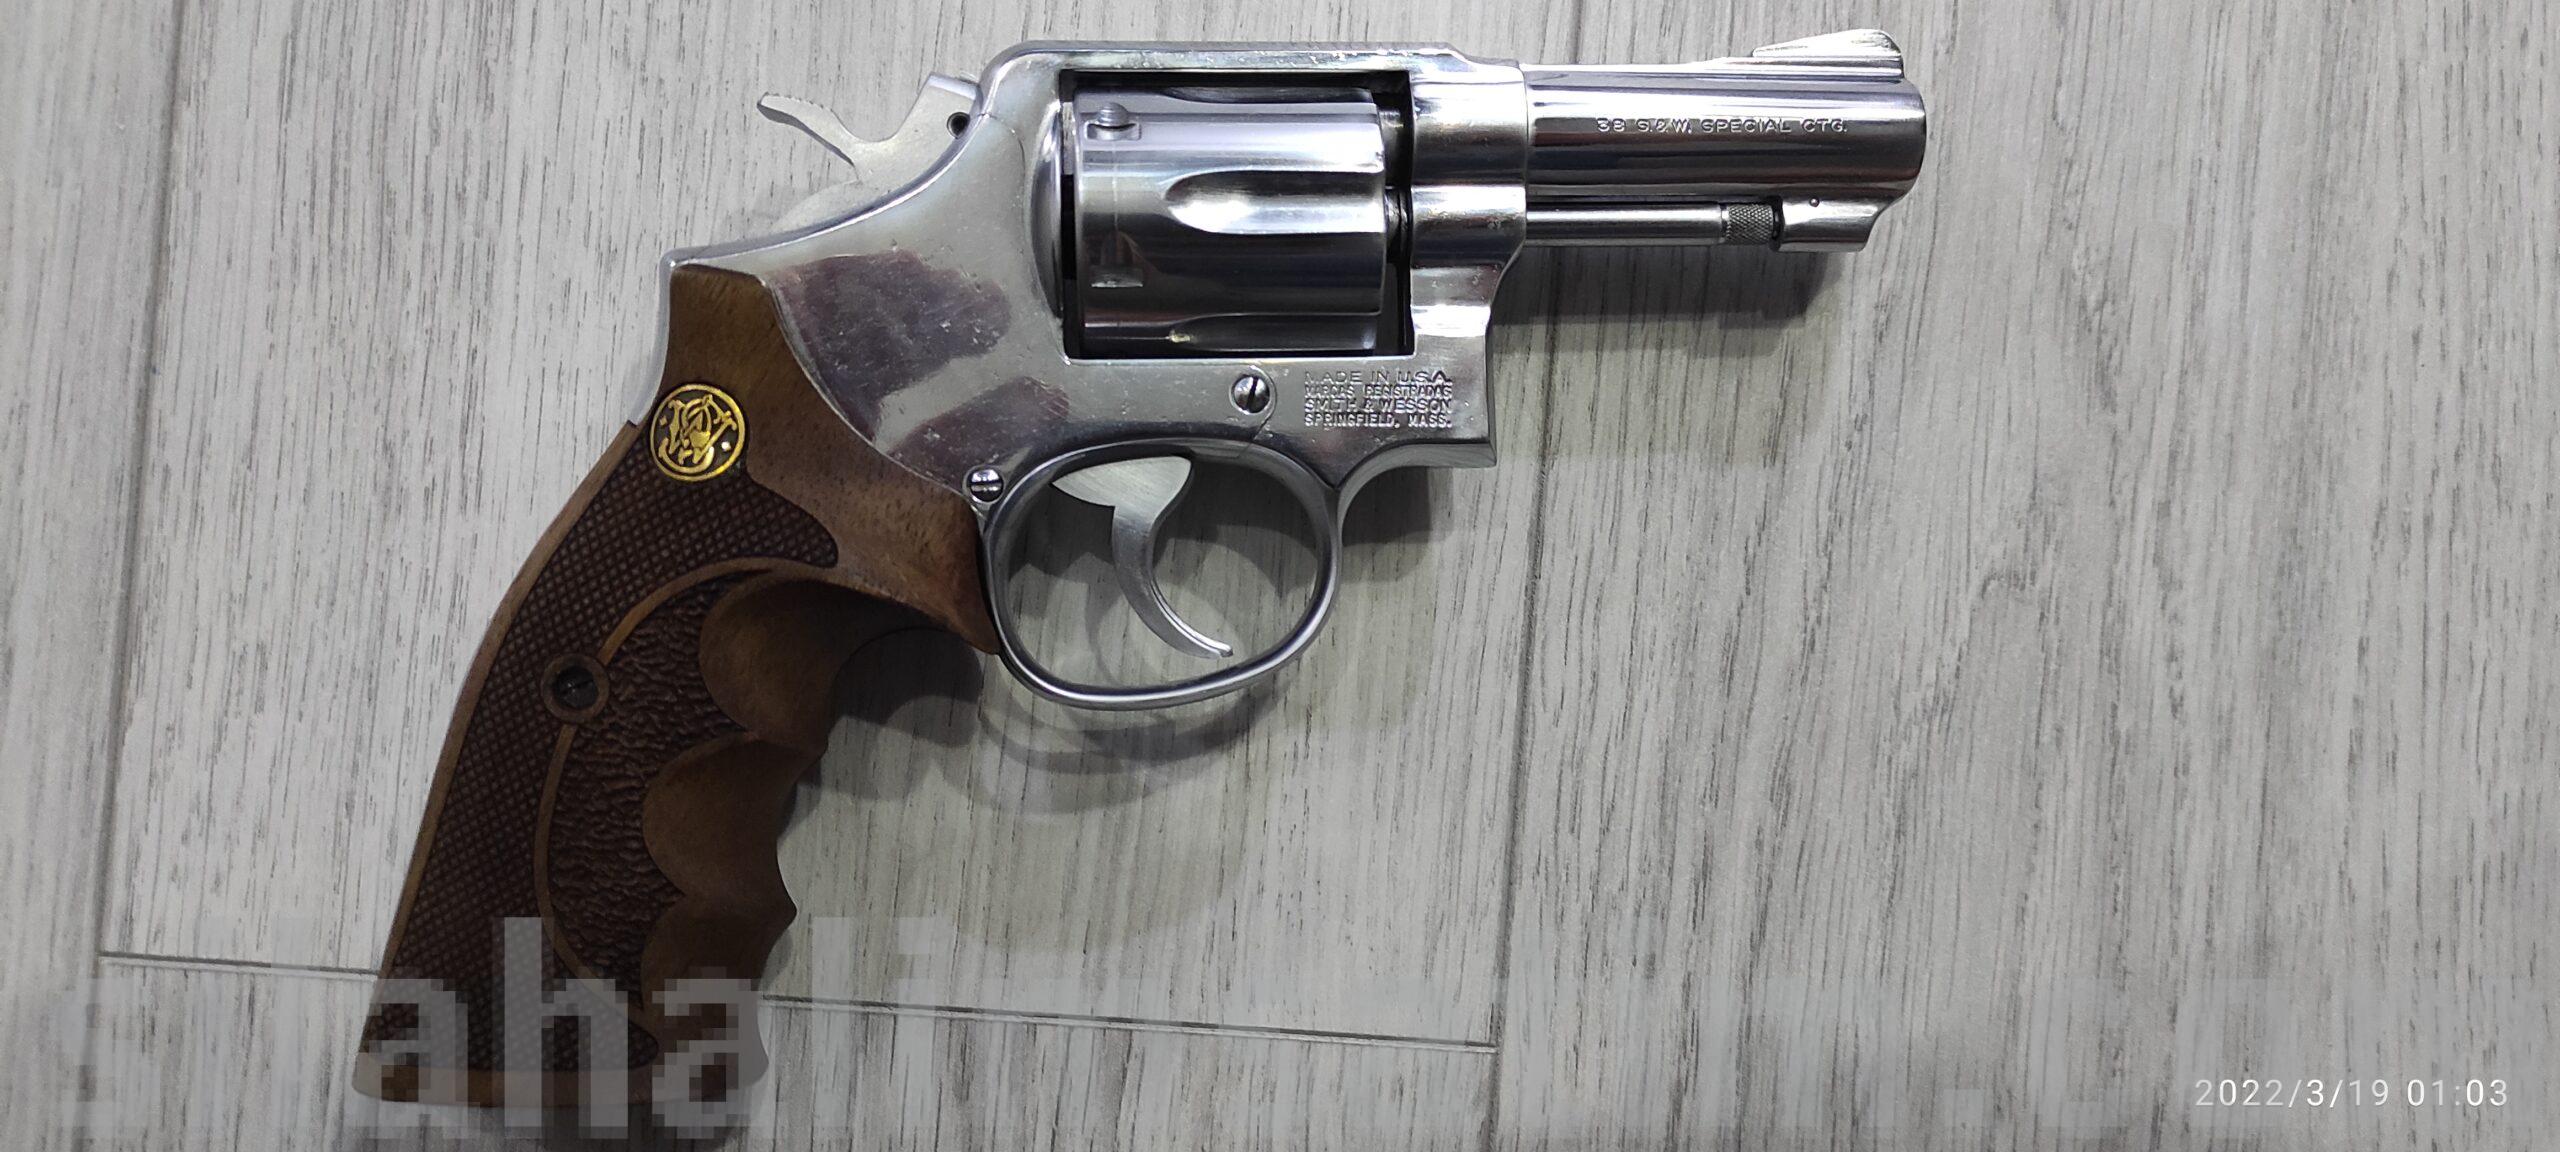 Tertemiz orjinal amerikan revolver